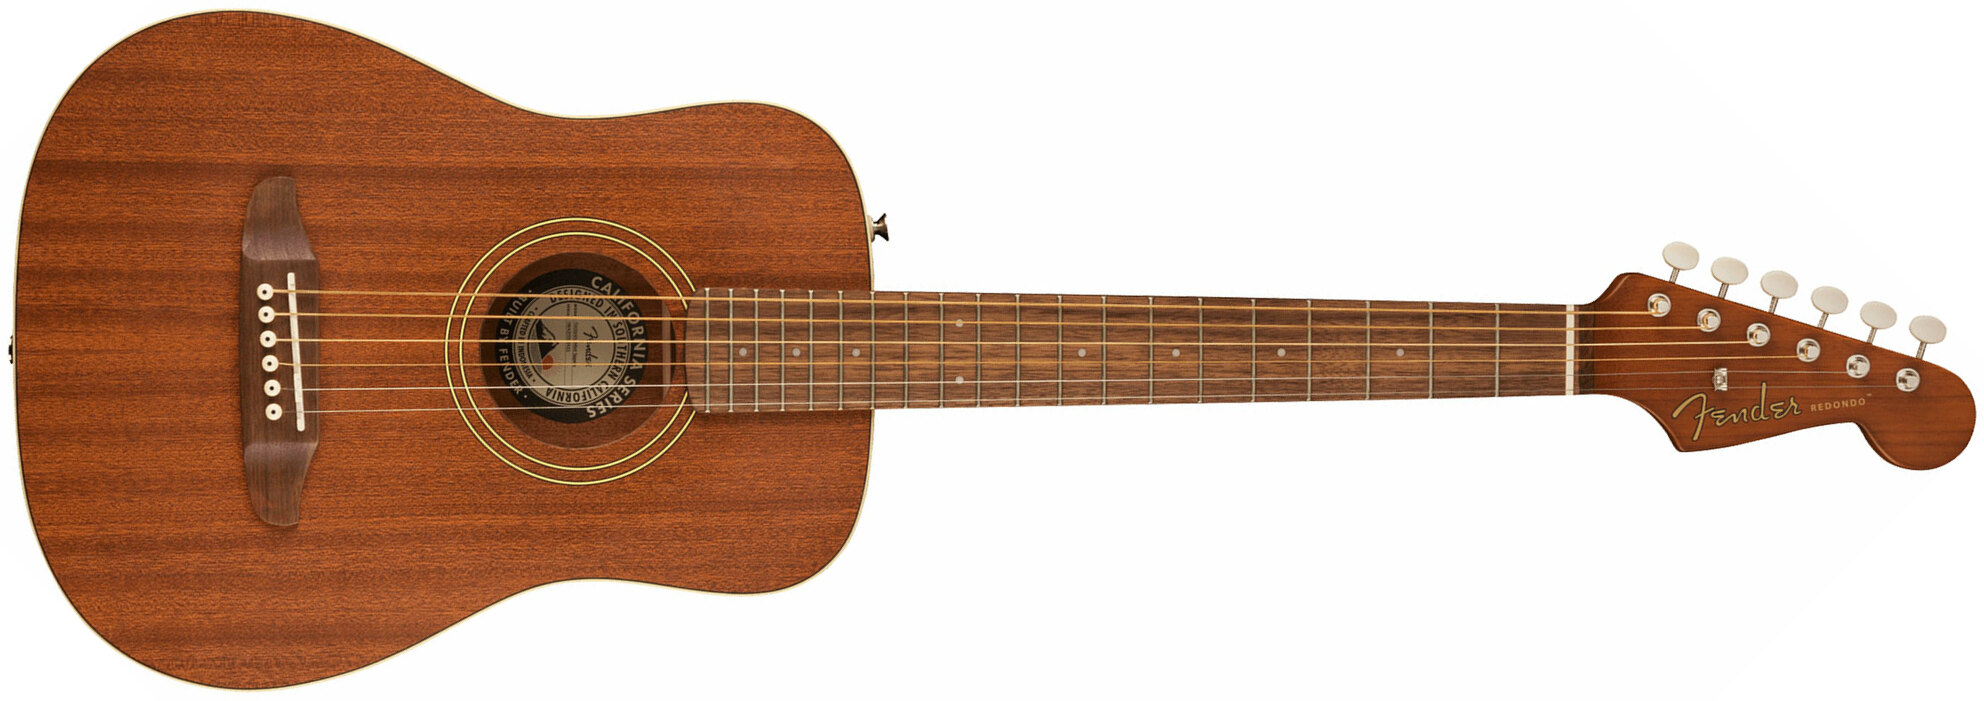 Fender Redondo Mini All Mahogany California Ltd Dreadnought 1/2 Tout Acajou Noy - Natural Satin - Guitarra acústica de viaje - Main picture